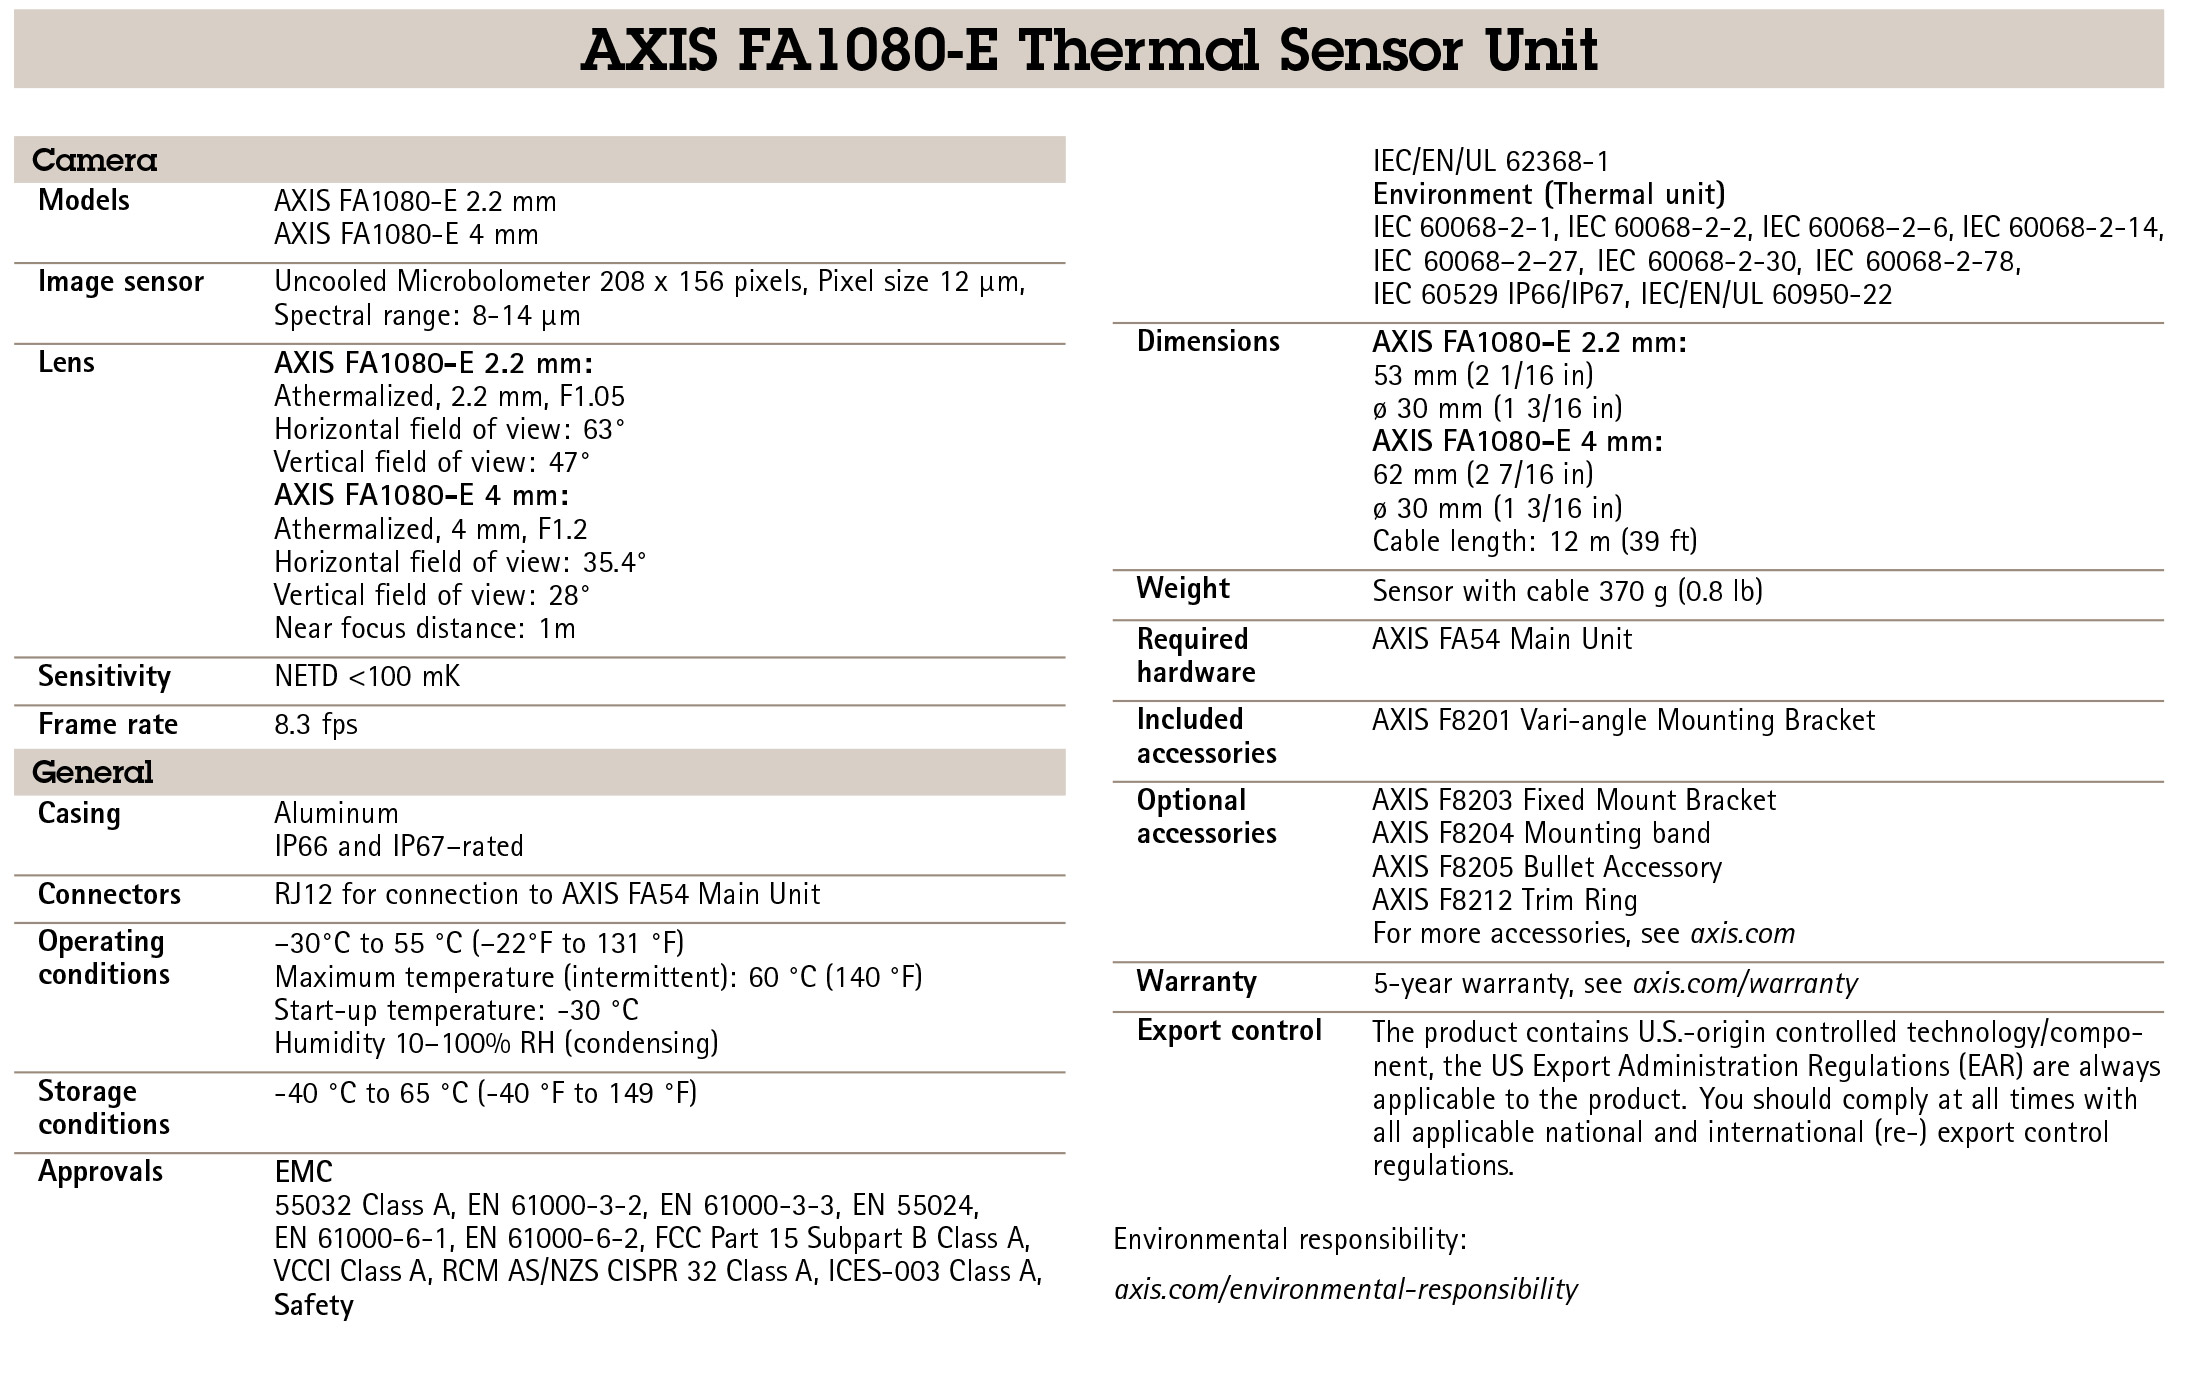 AXIS FA1080-E 2.2 MM 8.3 FPS Thermal Sensor